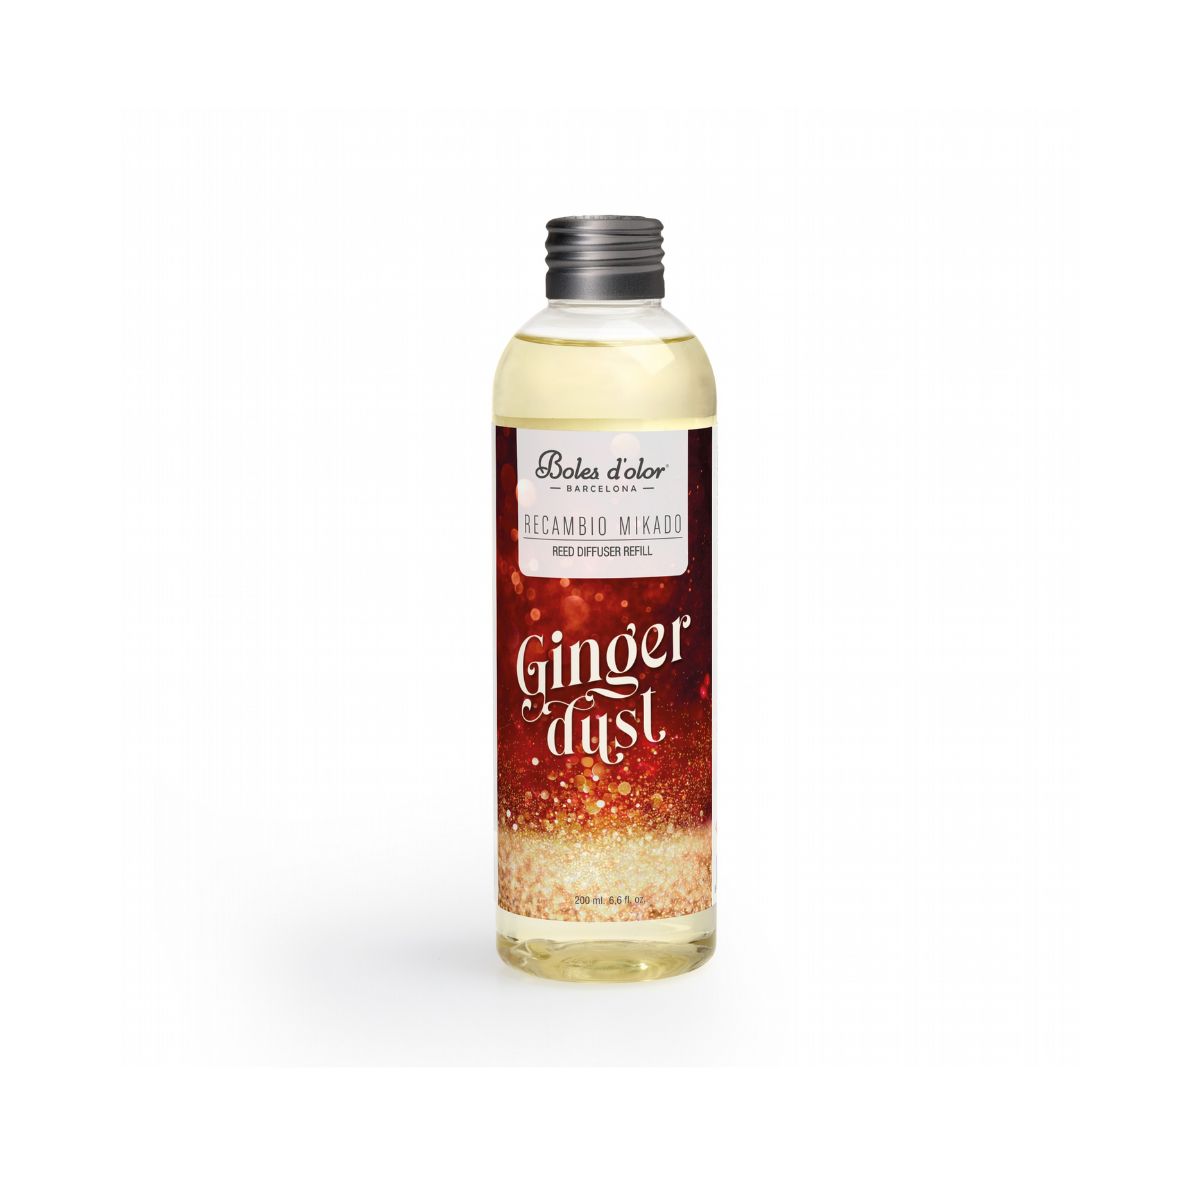 Recarga Mikado Ginger Dust c/Varetas de Vime Boles d'olor